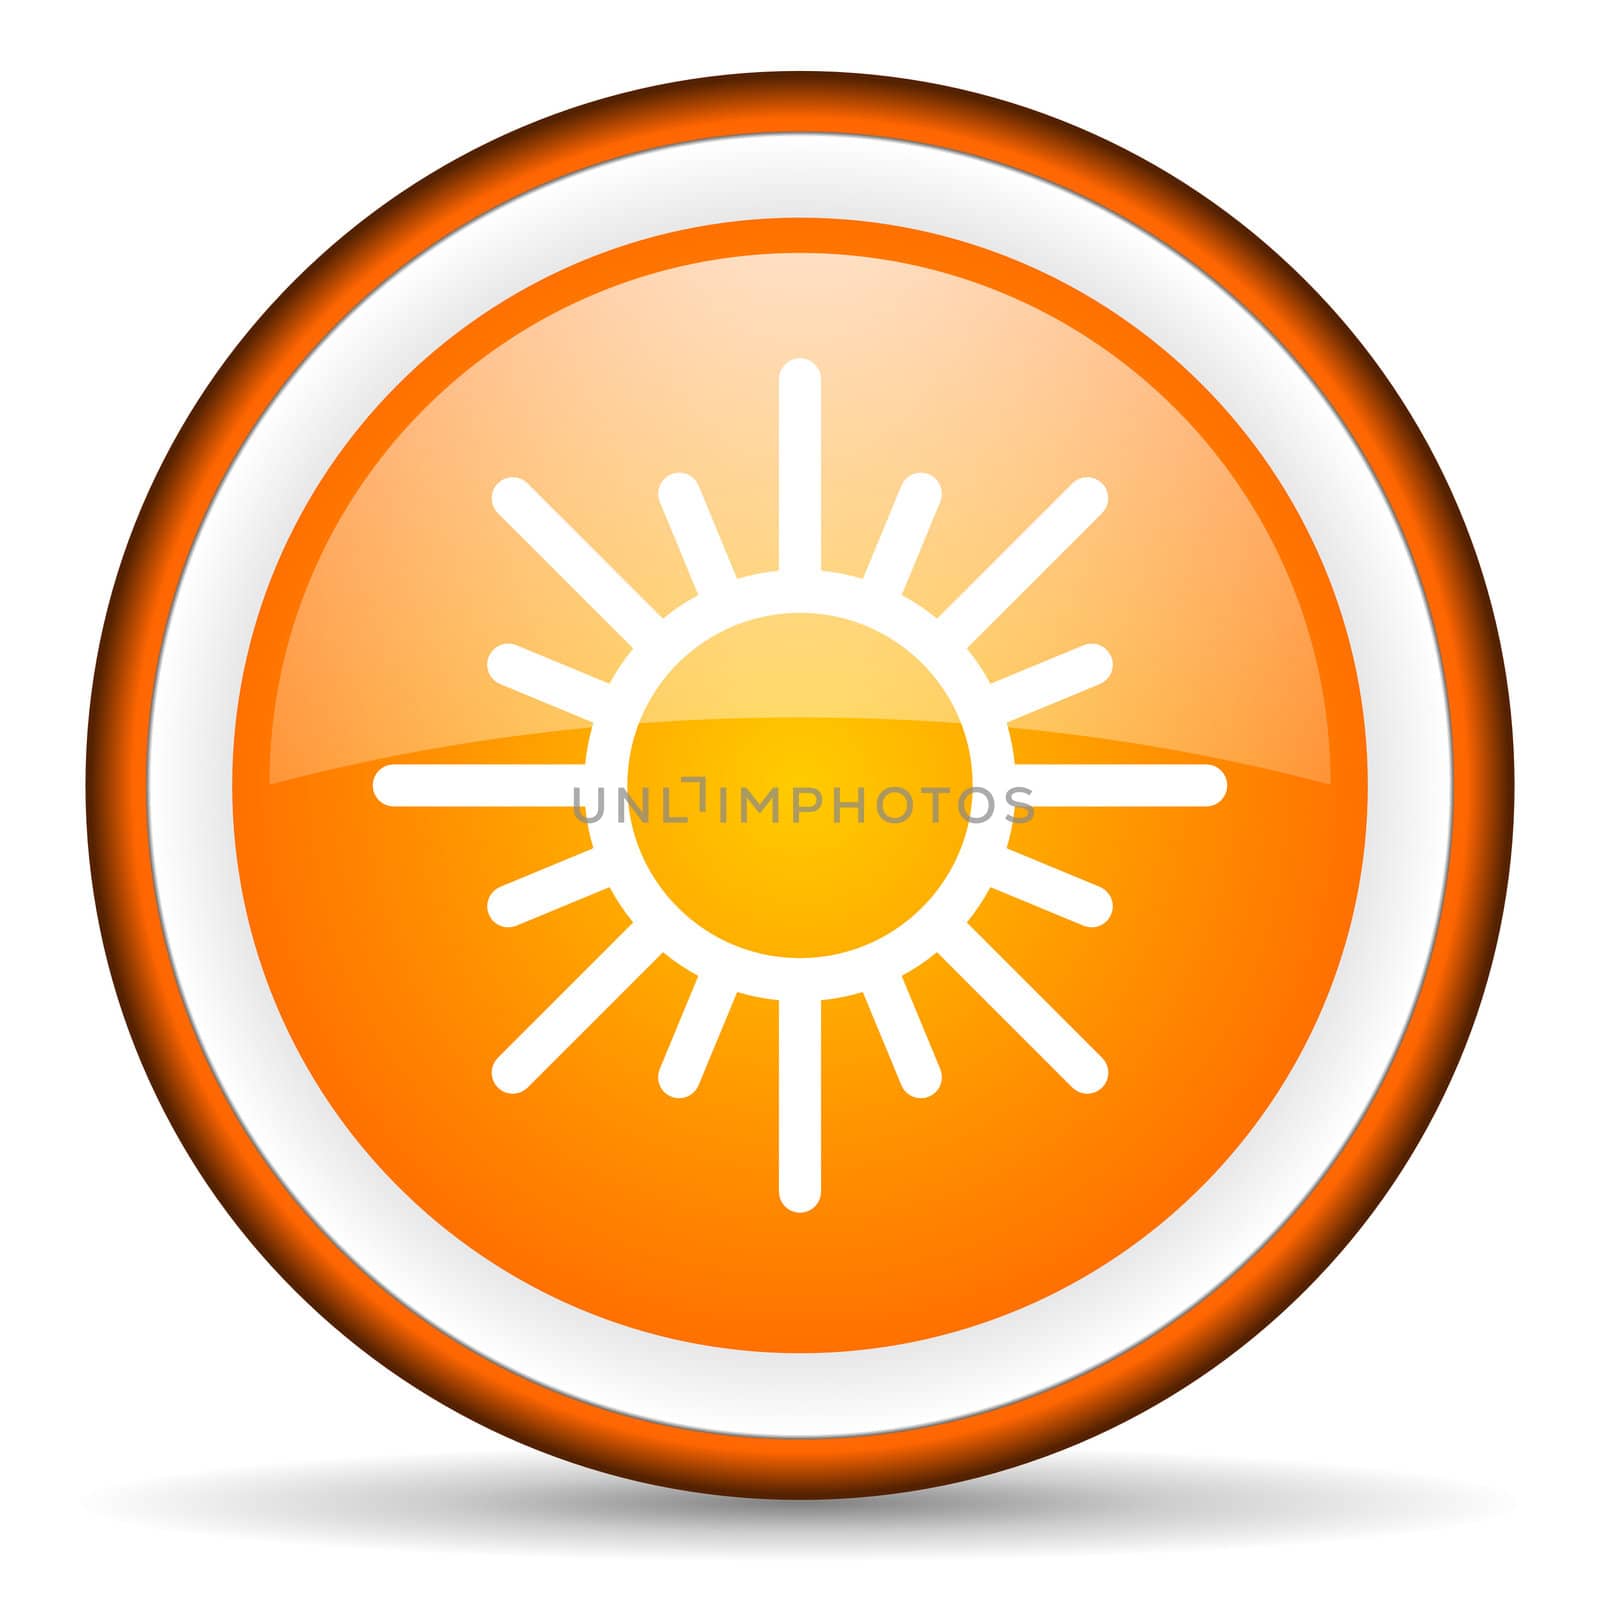 sun orange glossy circle icon on white background